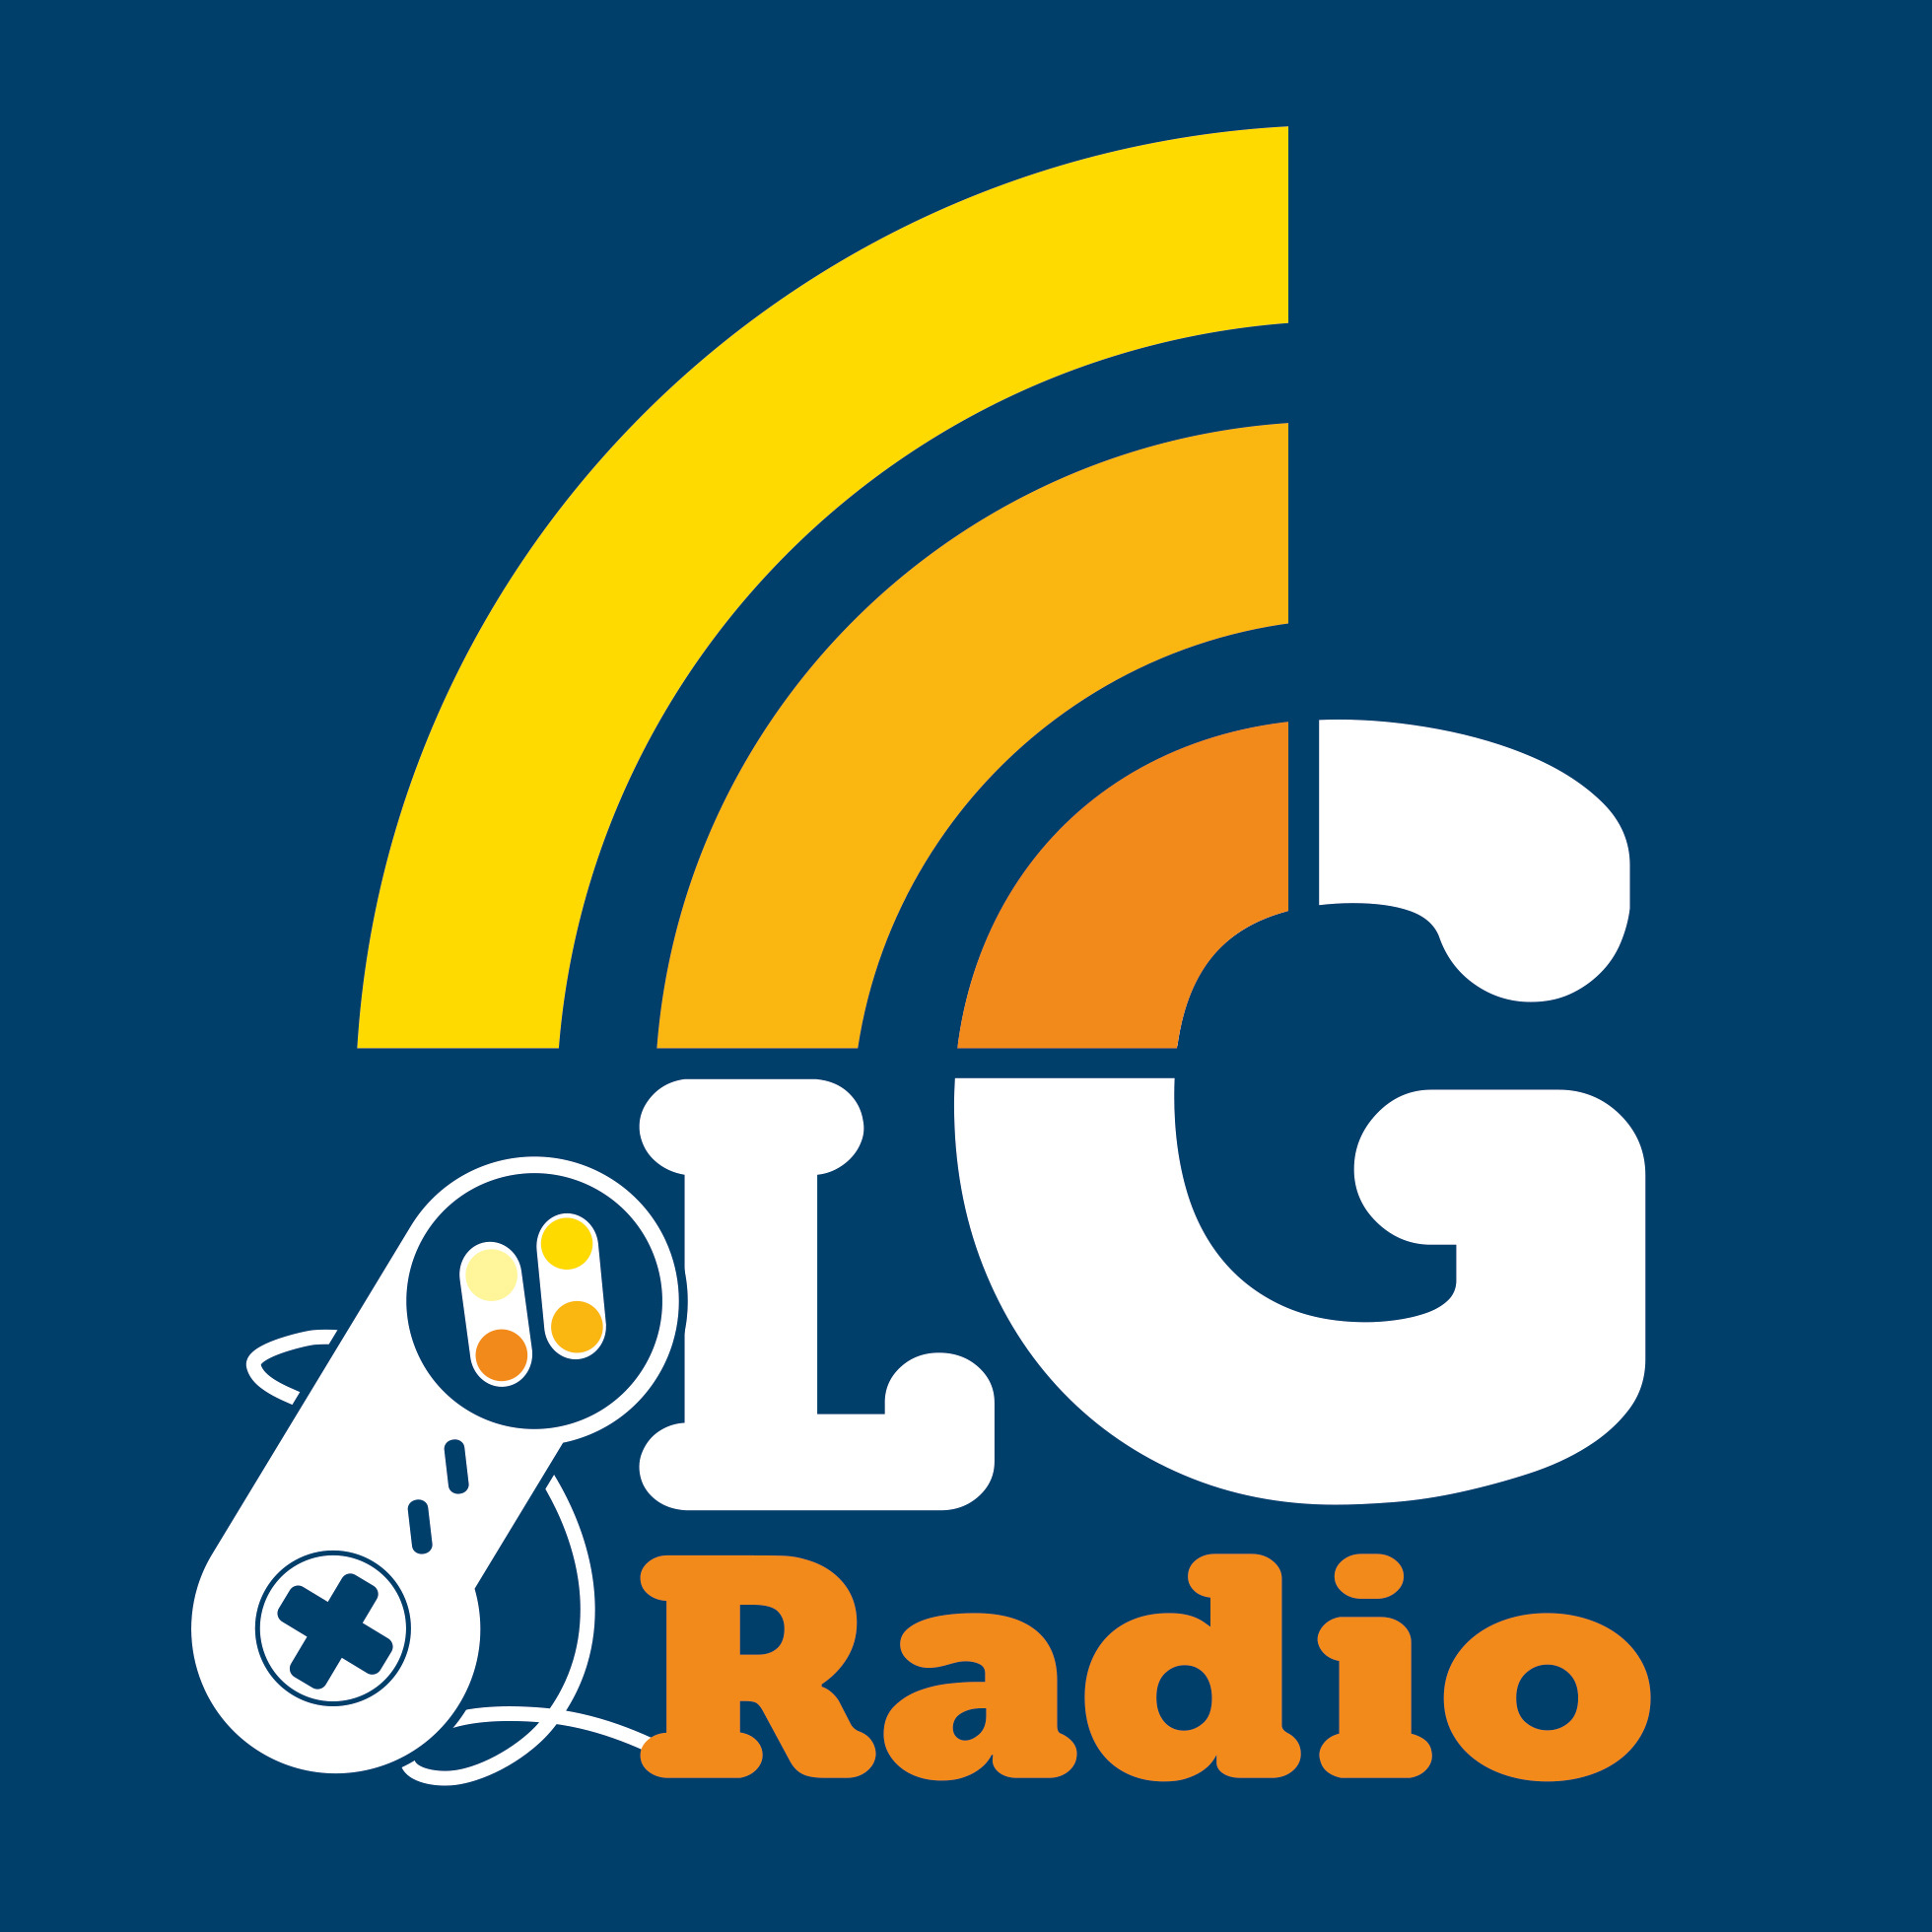 LGR 2016: Episode 39 - Lapsed News XXVI